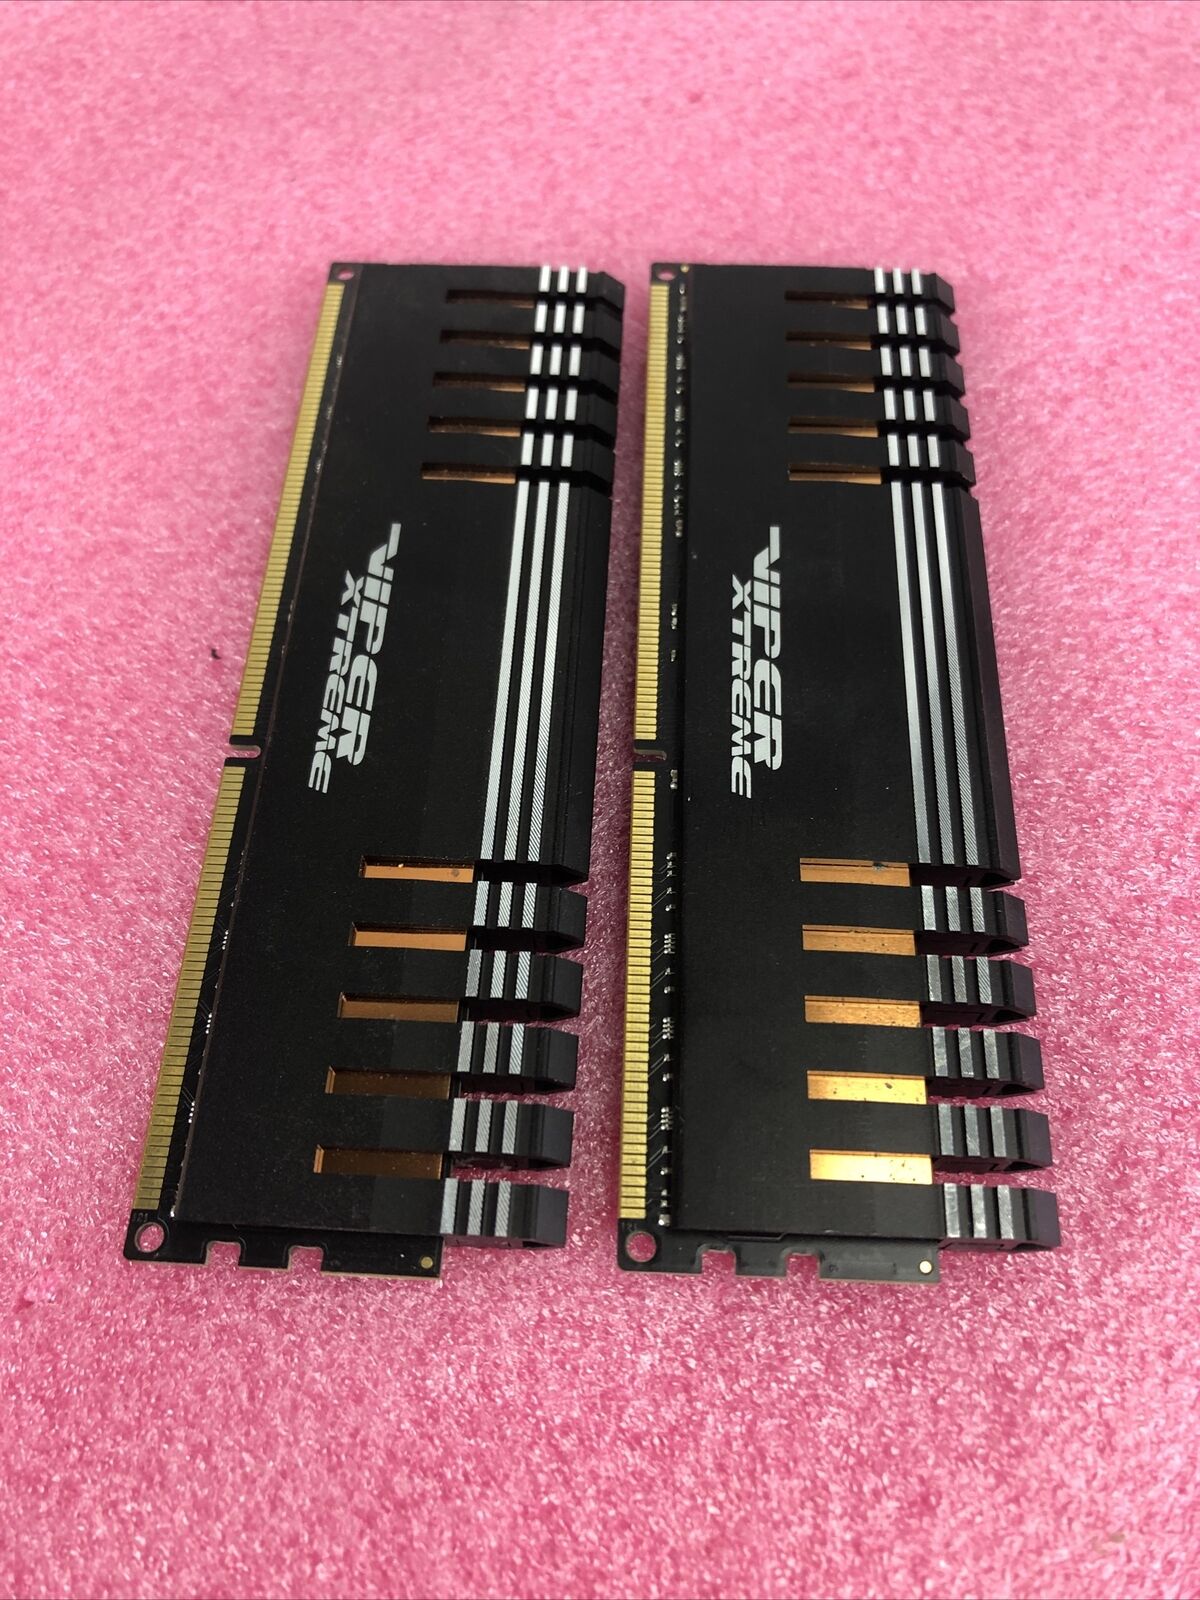 Viper Extreme PXD38G1600LLK kit of 2 8GB RAM